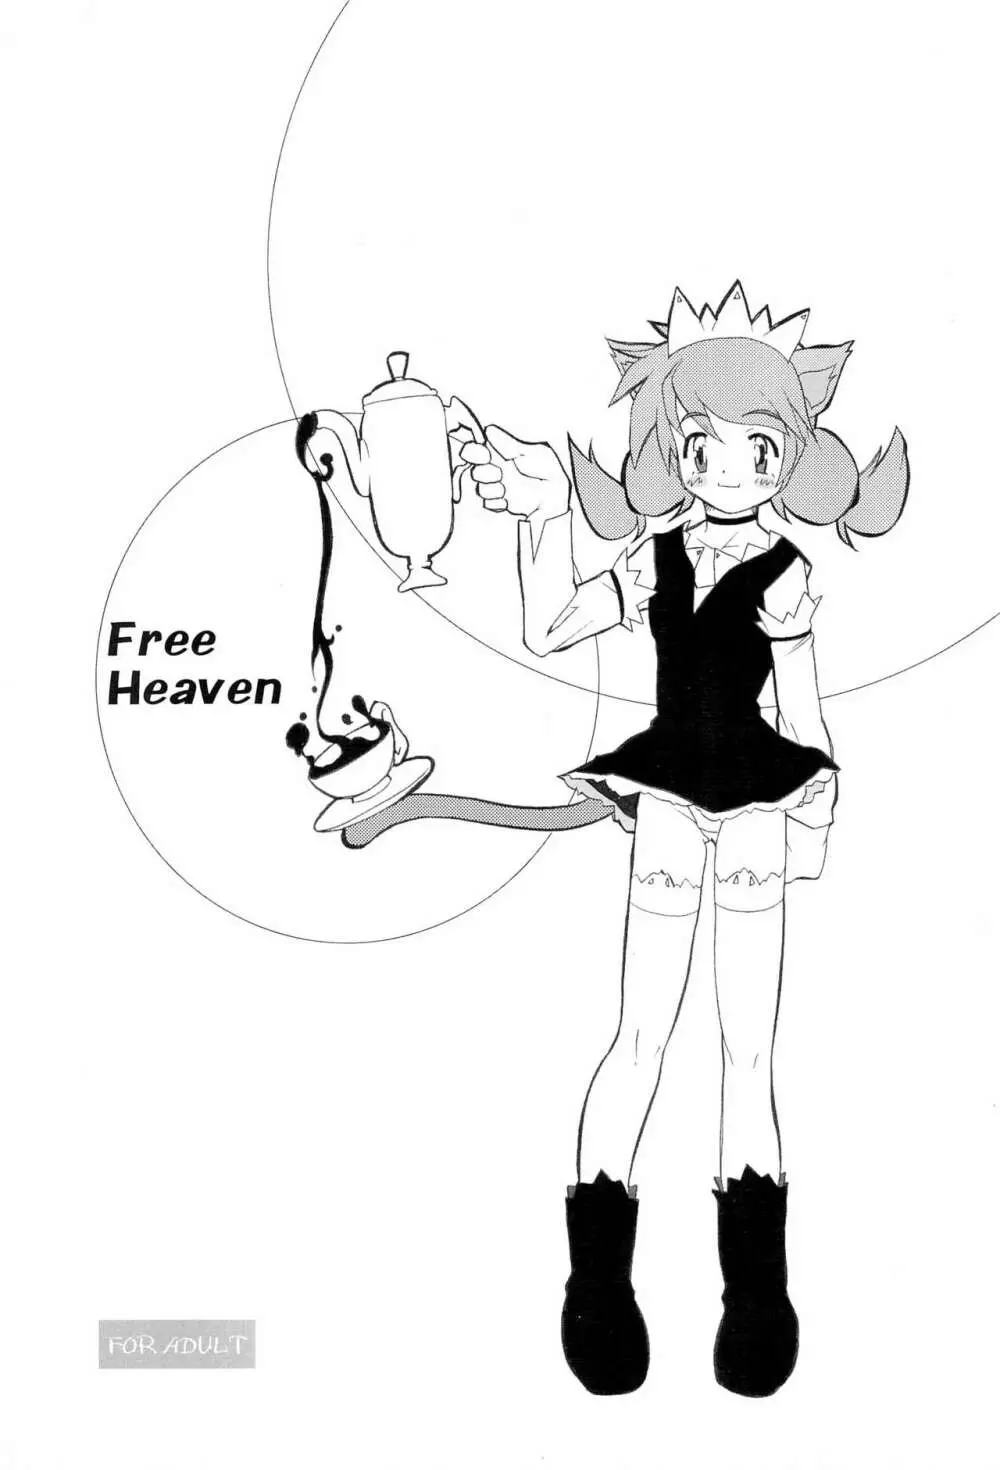 FREE HEAVEN